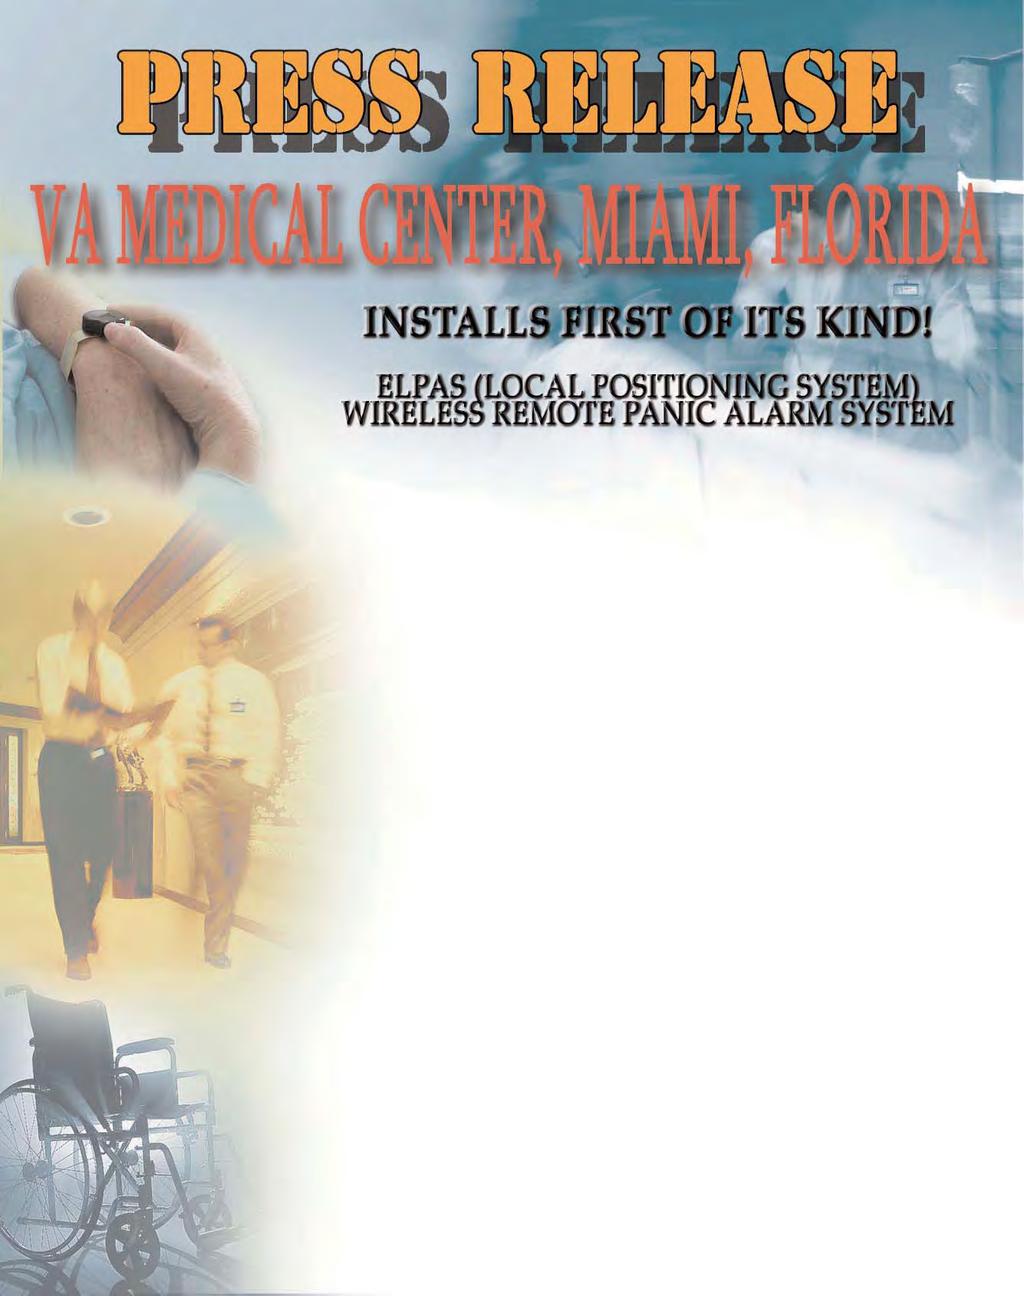 The VA Medical Center (VAMC), Miami, Florida, recently installed a wireless remote panic alarm system.